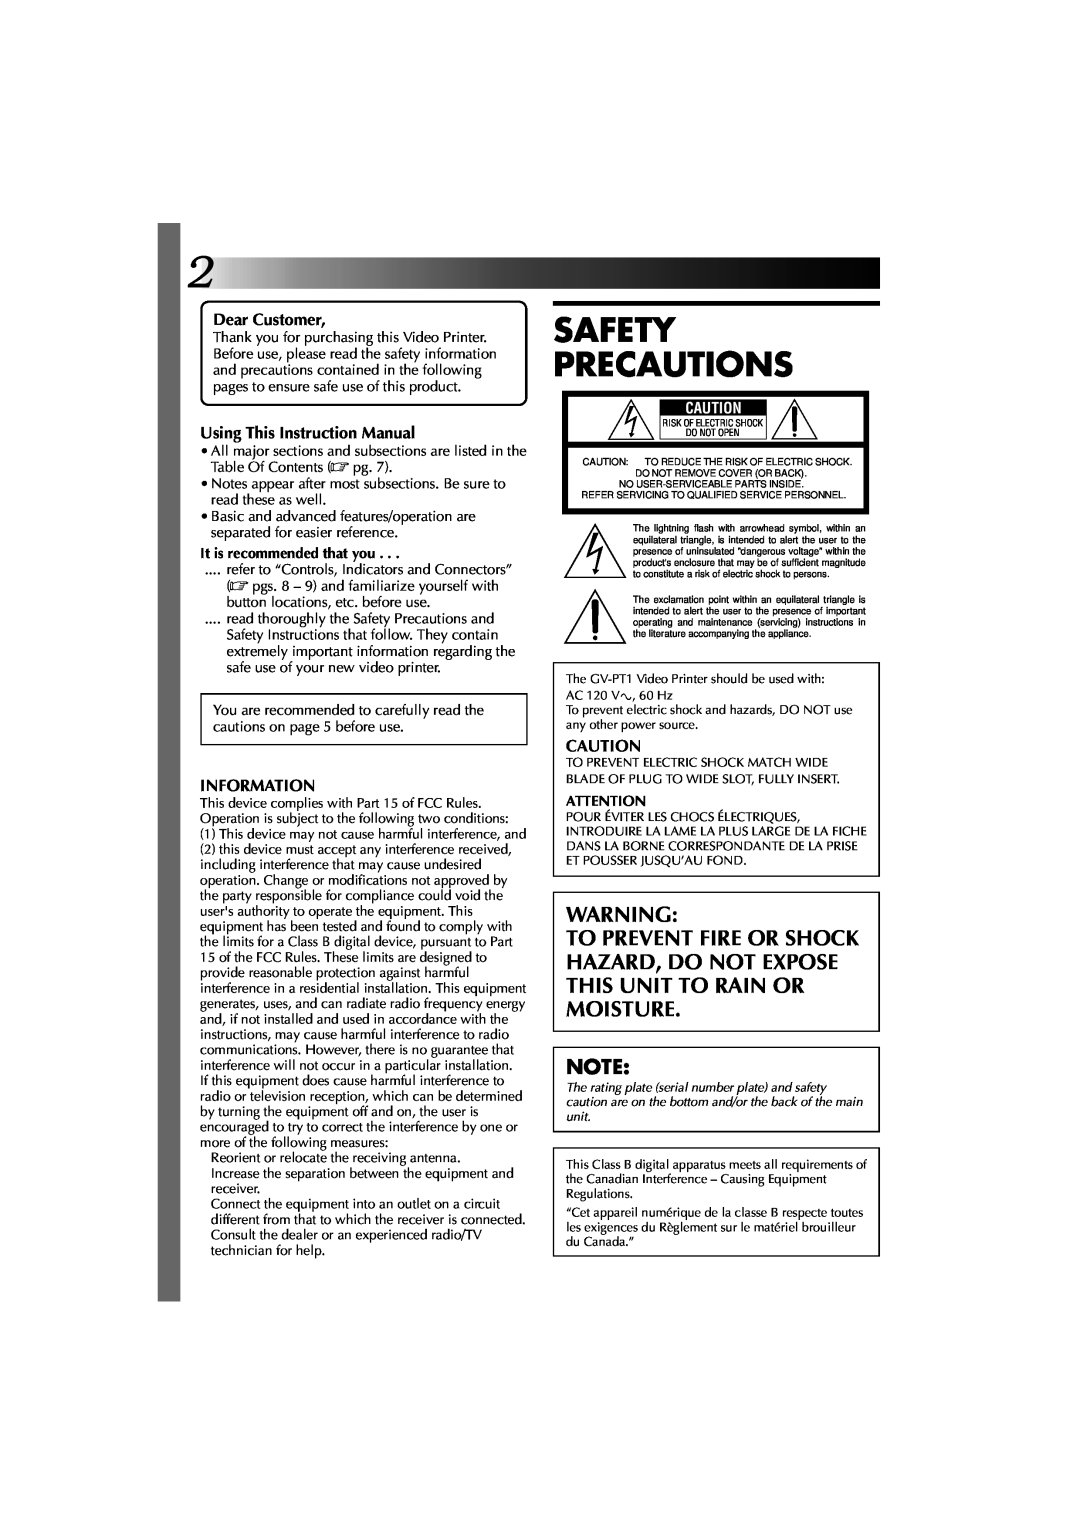 JVC GV-PT1 manual Safety Precautions, Dear Customer, Using This Instruction Manual, Information 